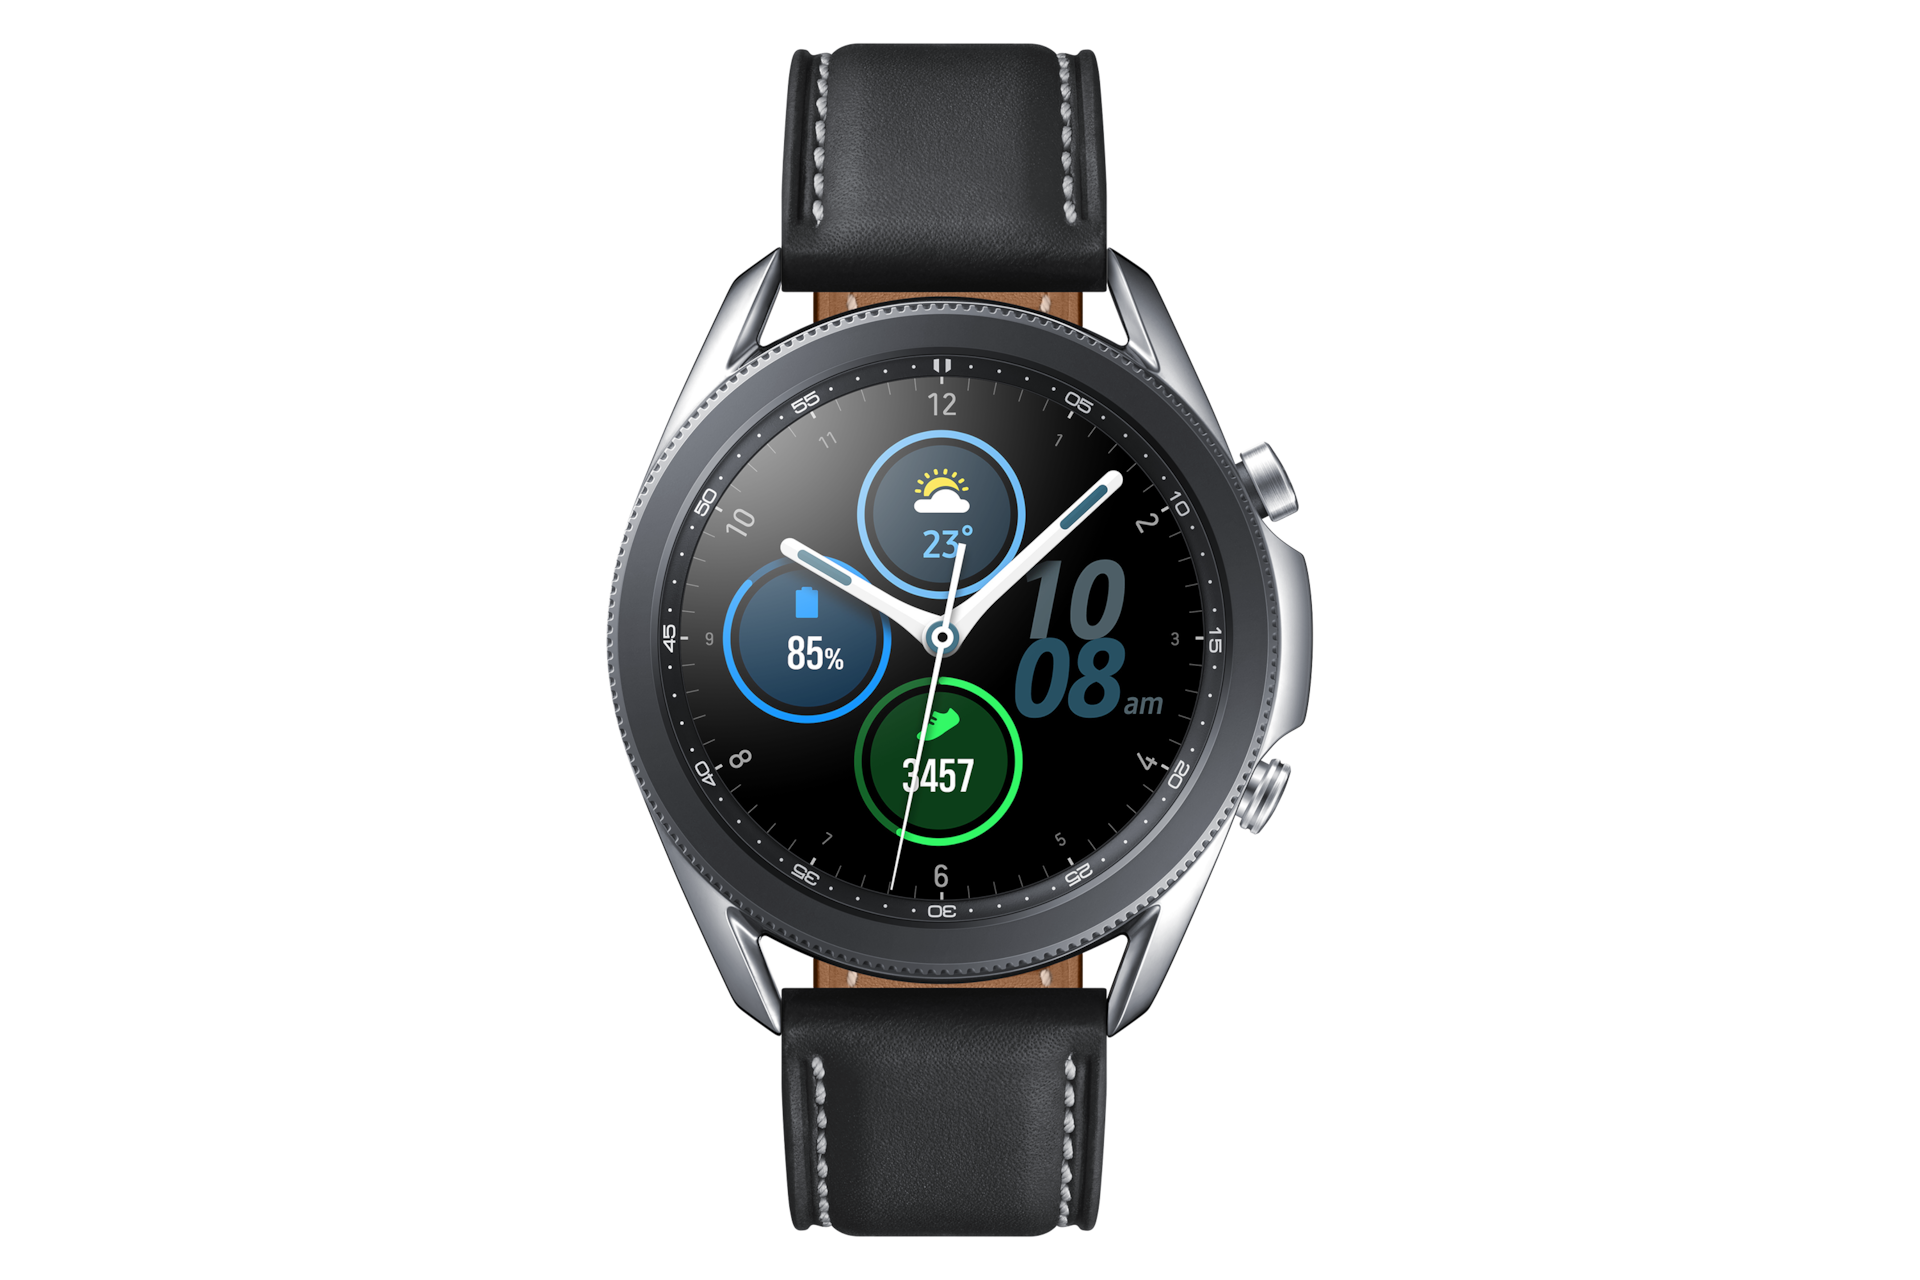 Beli Samsung Galaxy Watch 42mm Black Harga Terbaik | Samsung Indonesia